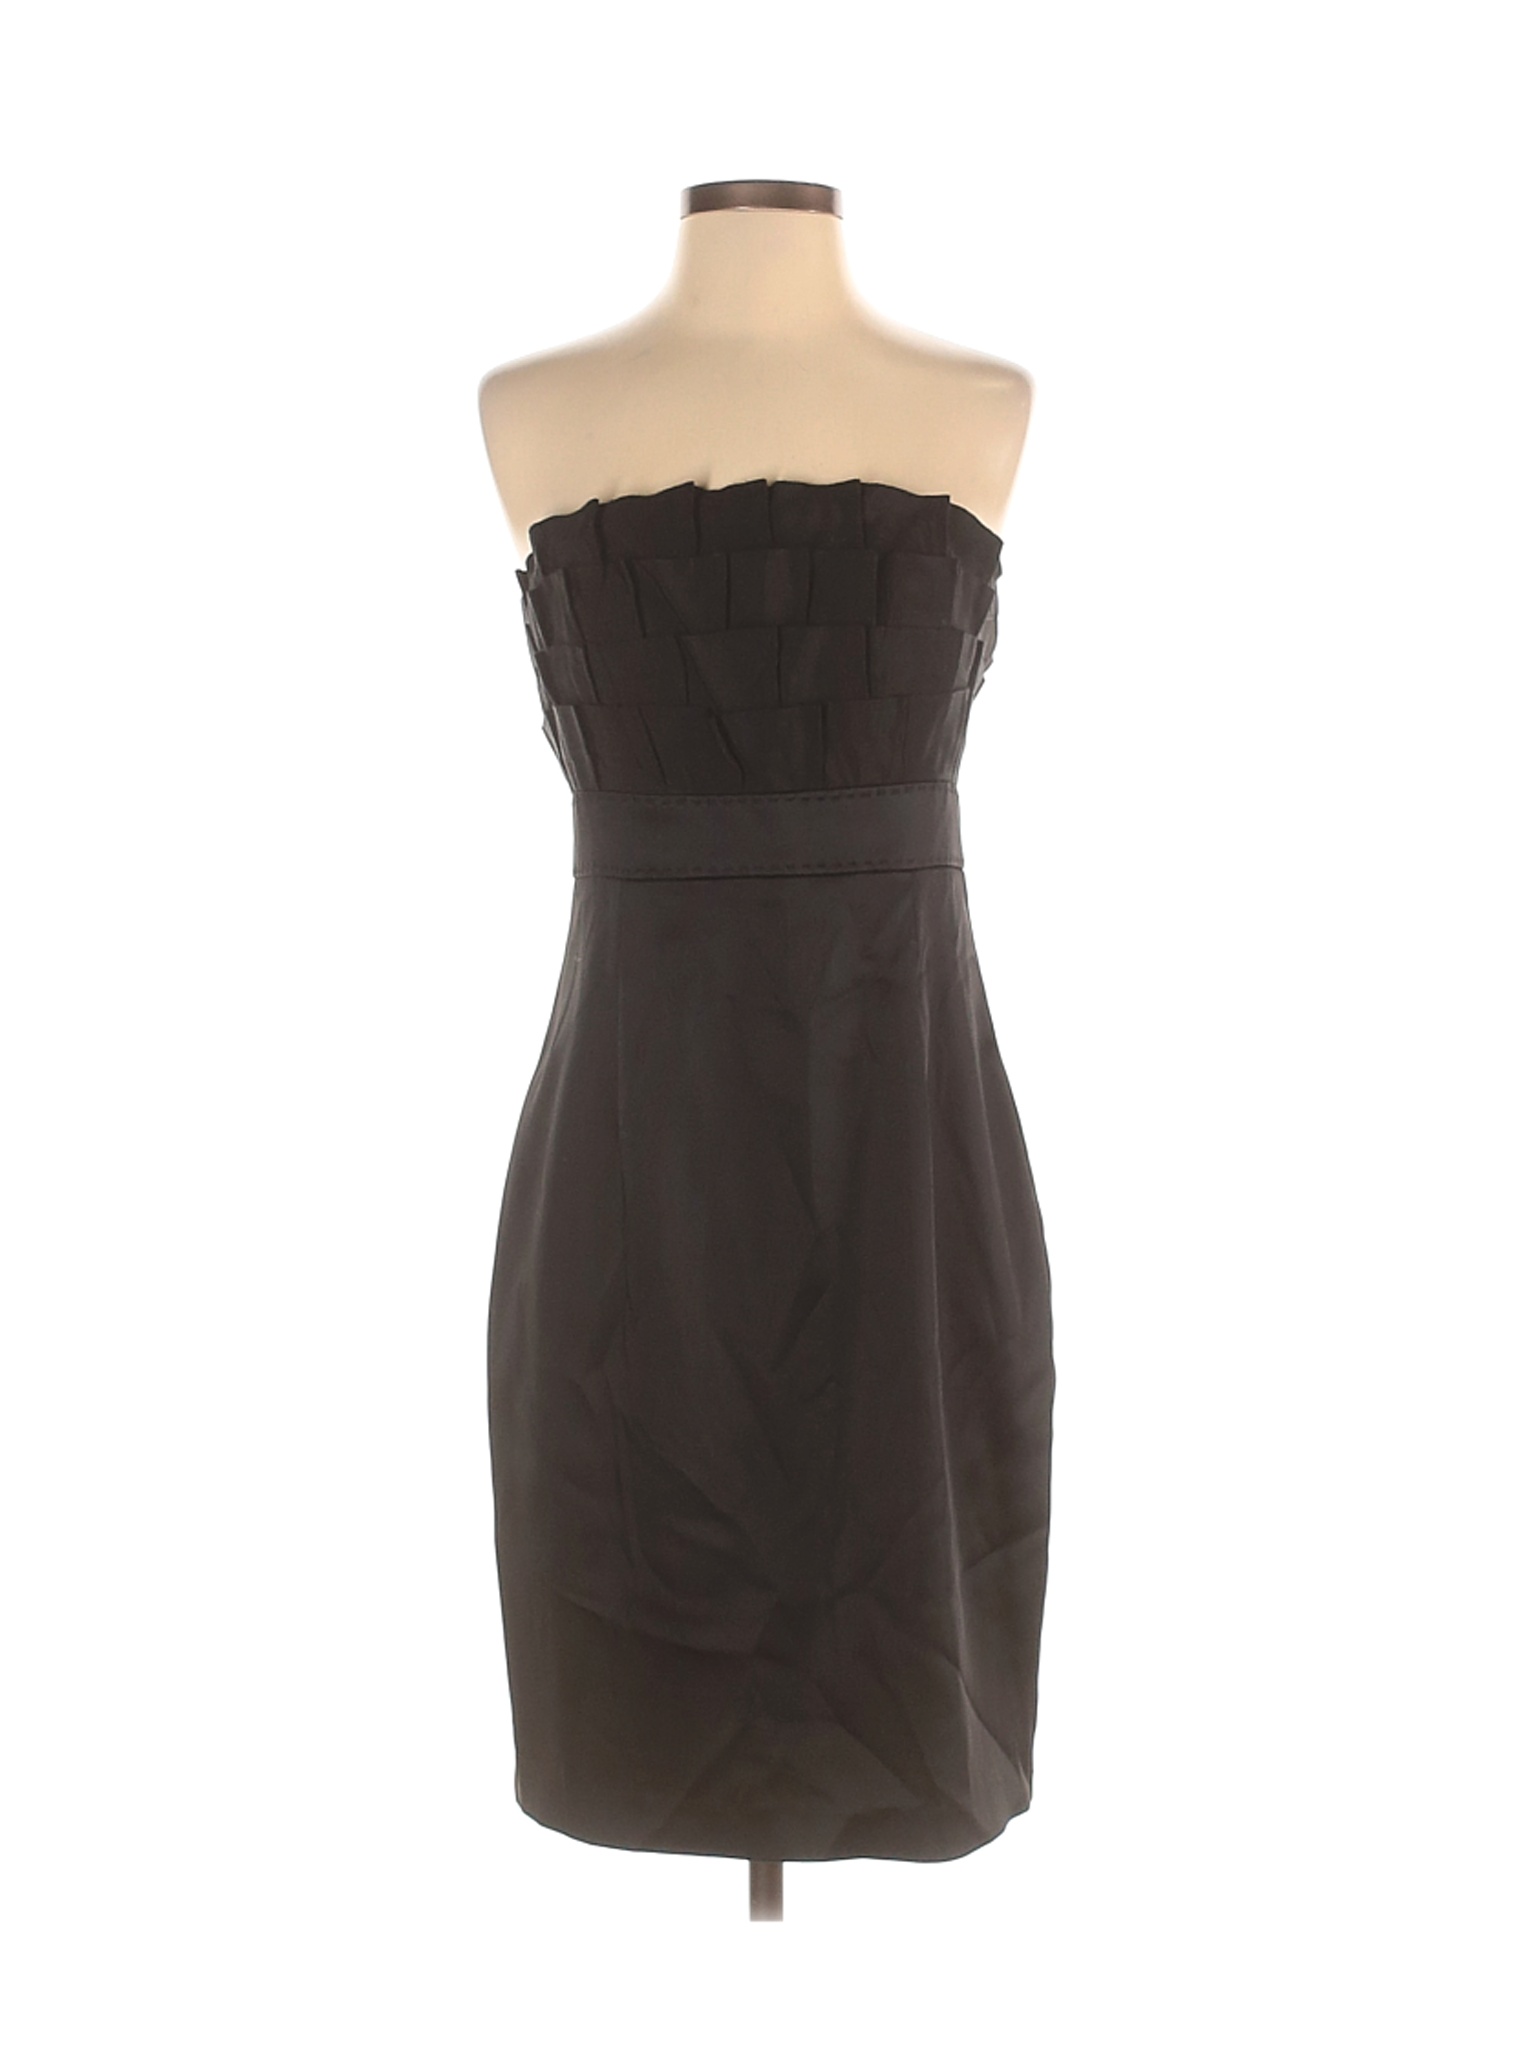 Maggy London Women Black Cocktail Dress 6 | eBay